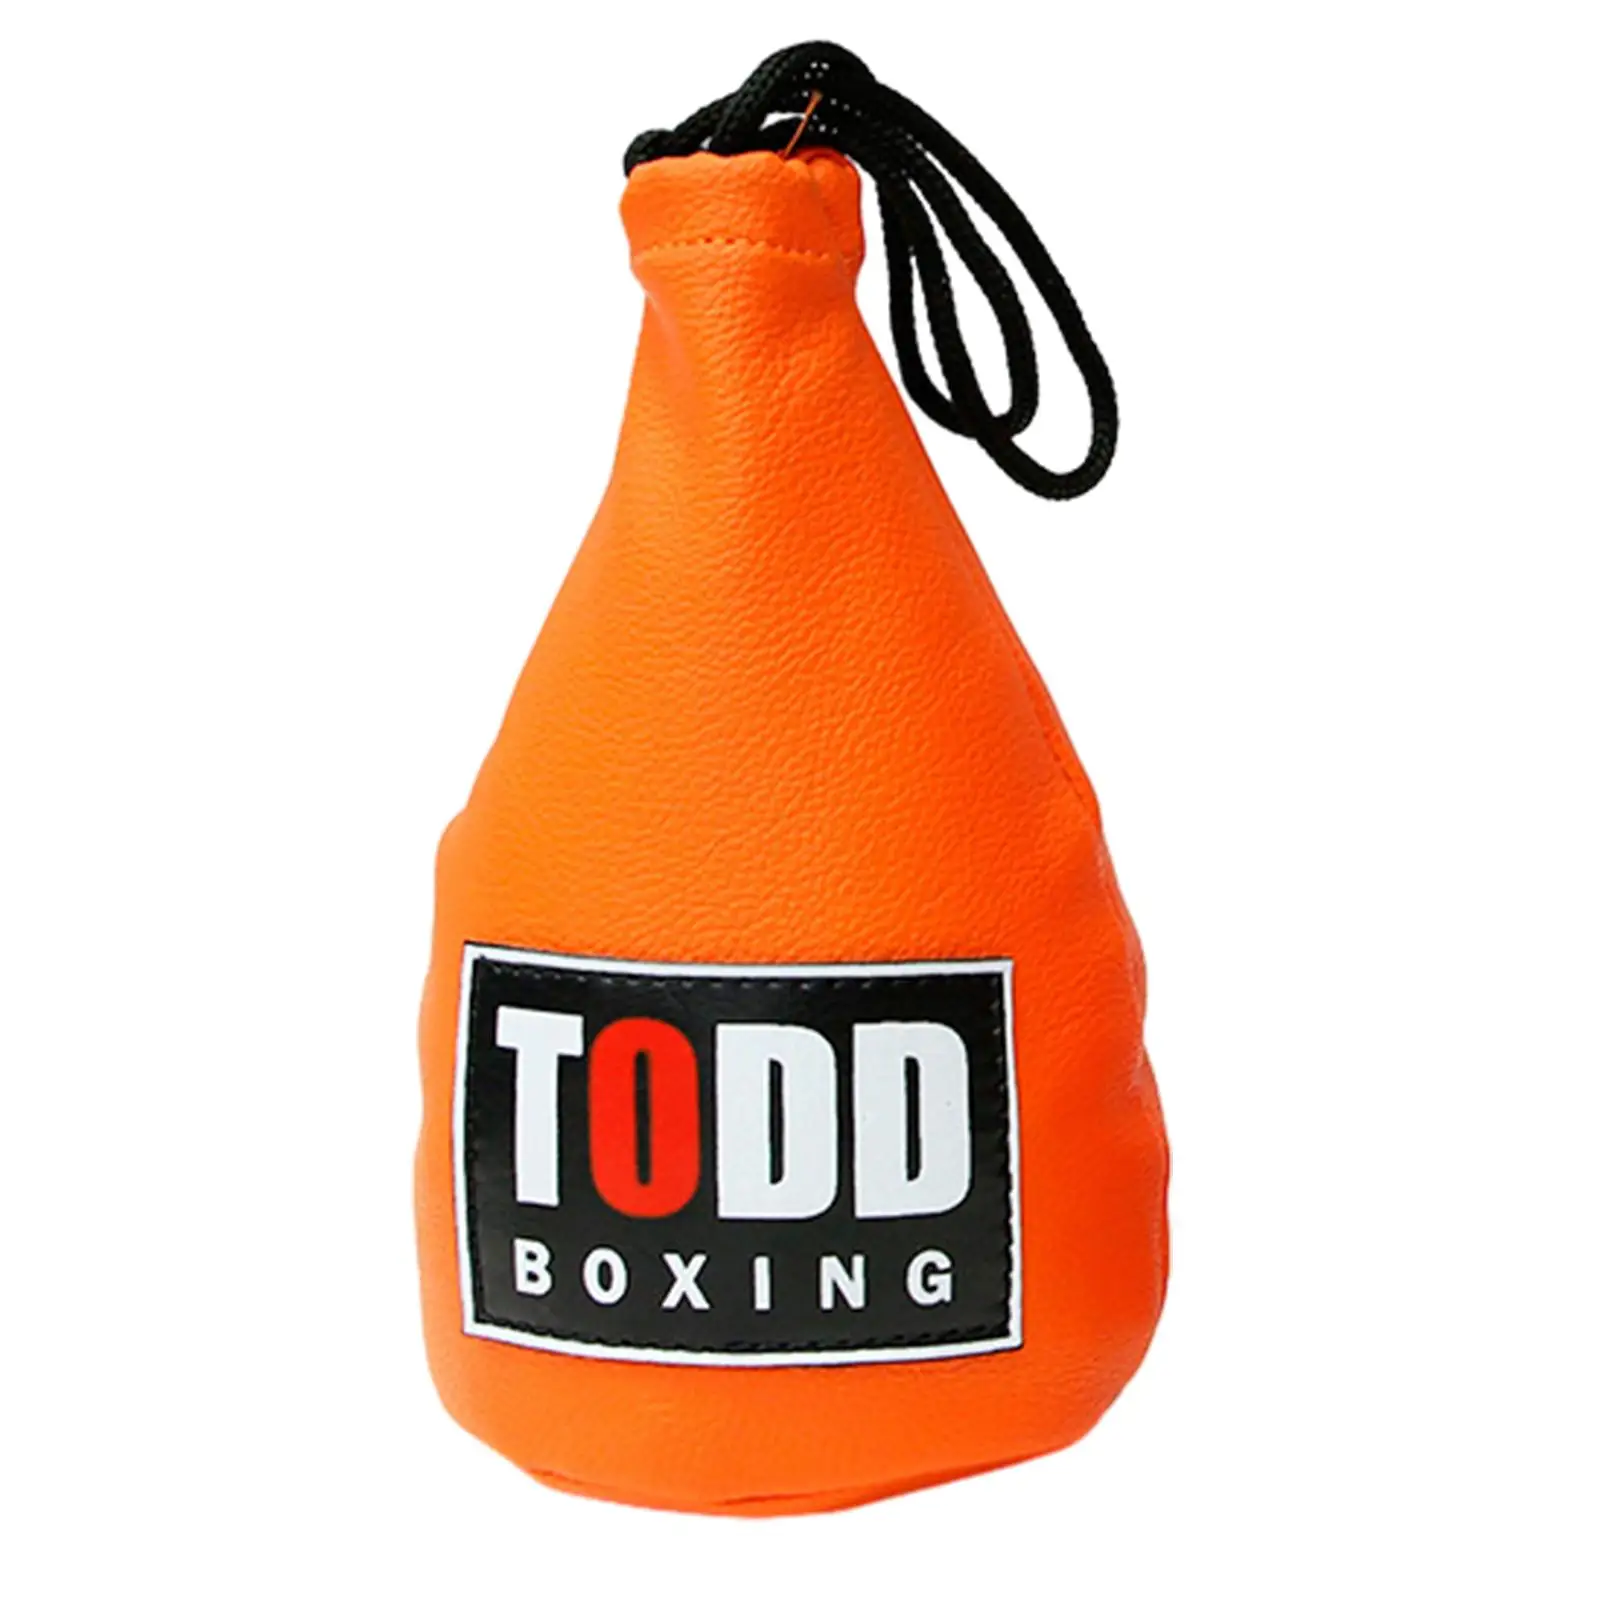 Boxing Dodge Speed Bag Punching Bag Punch Exercise Dodge Reaction Bag for Hand Eye Coordination Muay Thai Karate Sparring Indoor